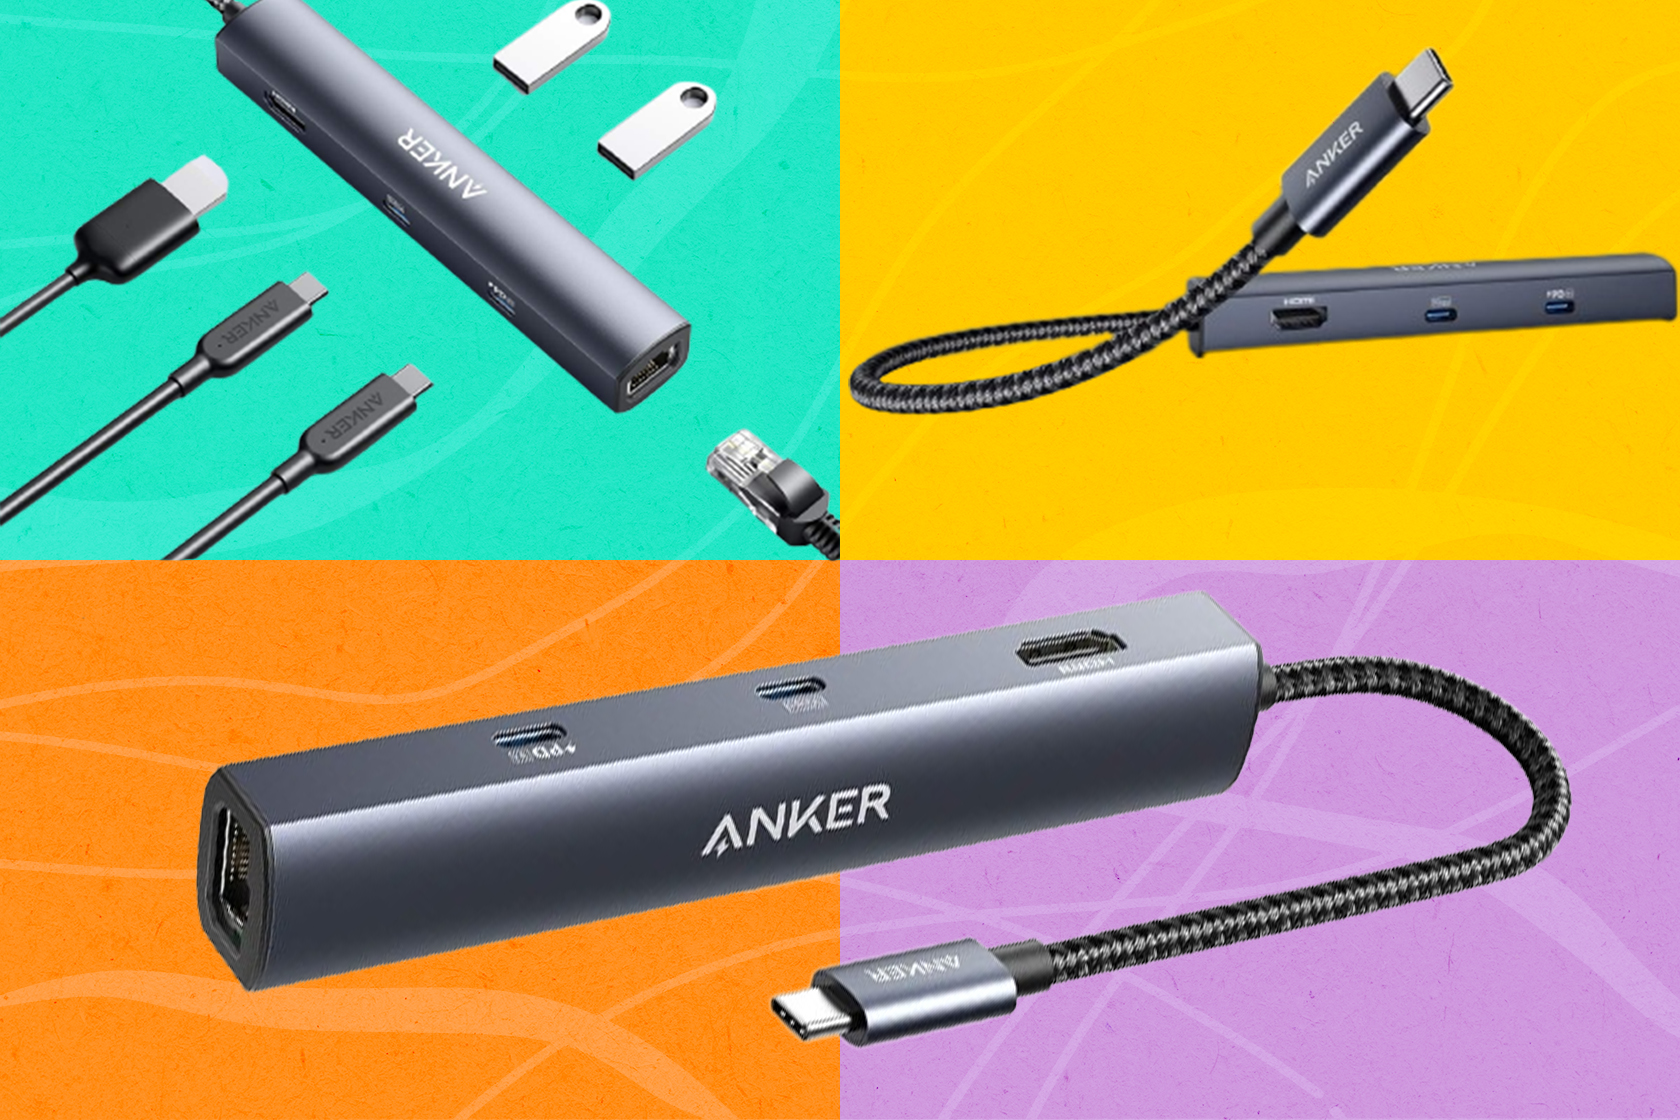 Anker USB C Hub, PowerExpand 3-in-1 USB C Hub